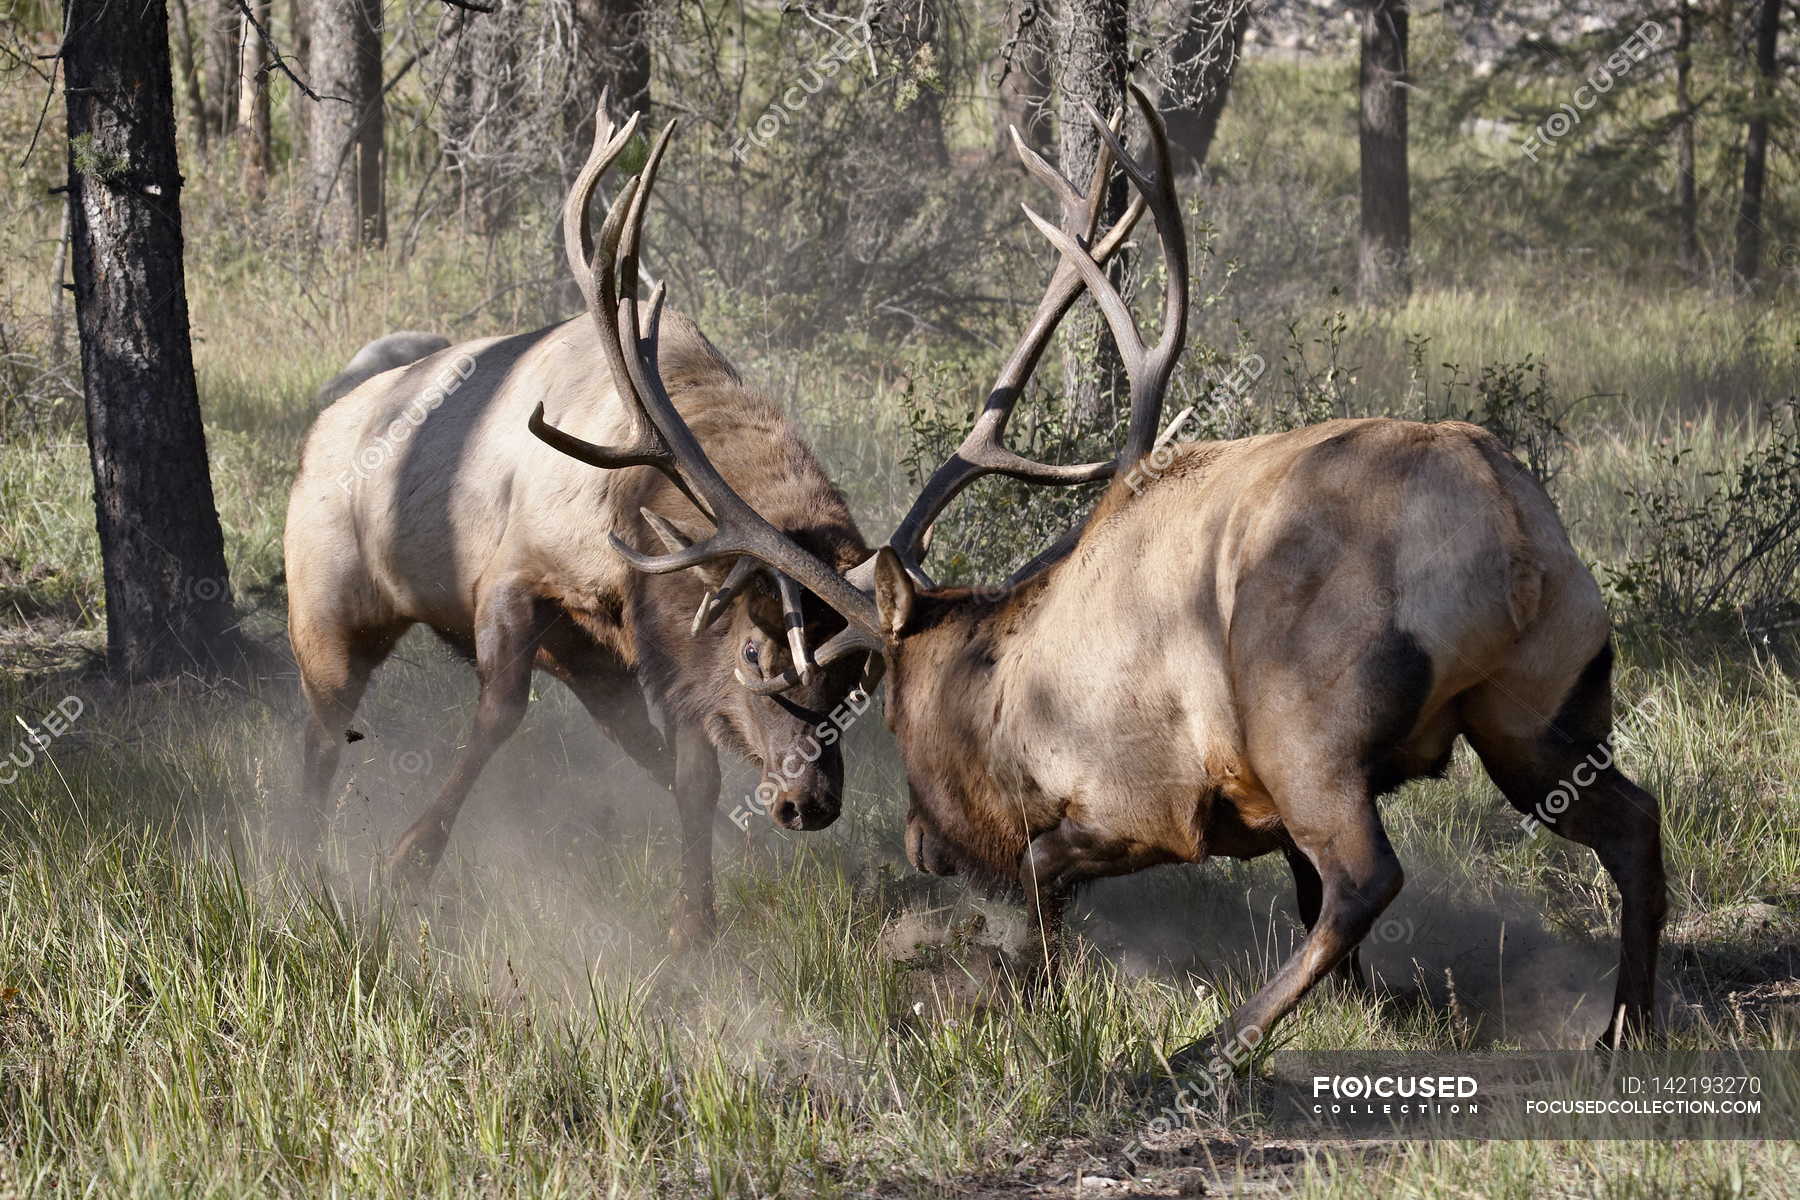 Two bull elk, fighting — Stock Photo | #142193270